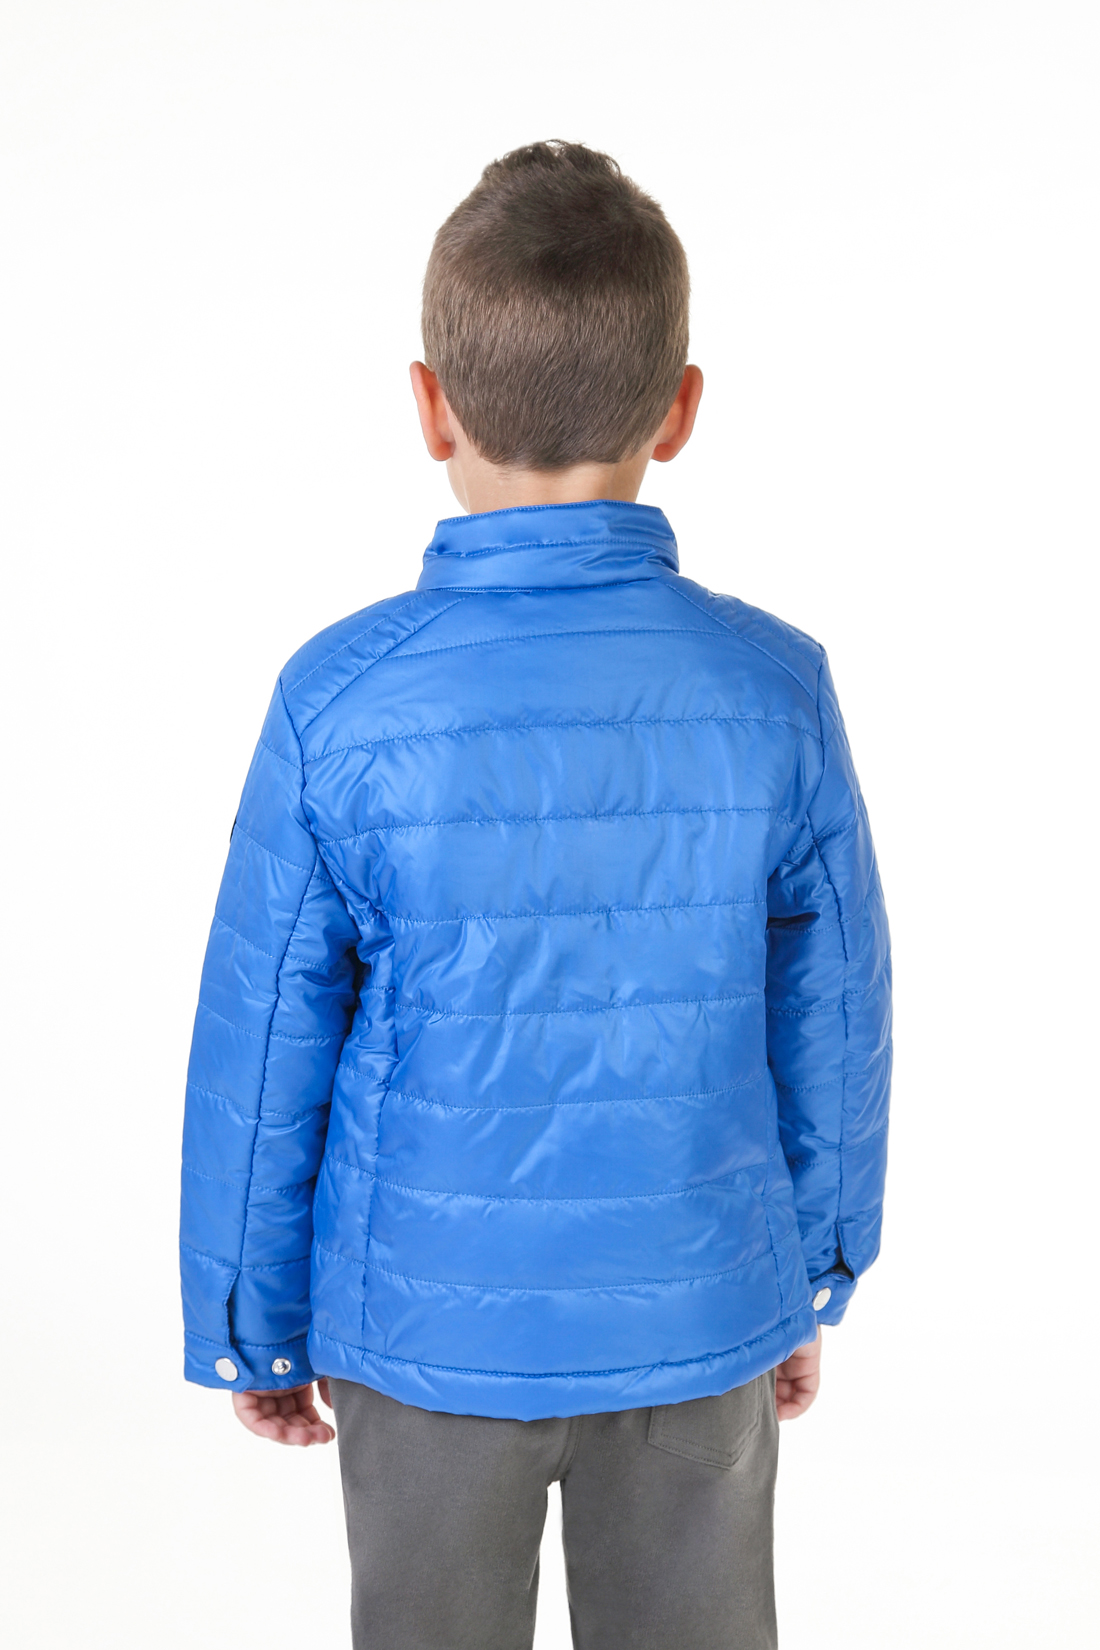 Куртка для мальчика (арт. baon BK538002), размер 122-128, цвет синий Куртка для мальчика (арт. baon BK538002) - фото 2